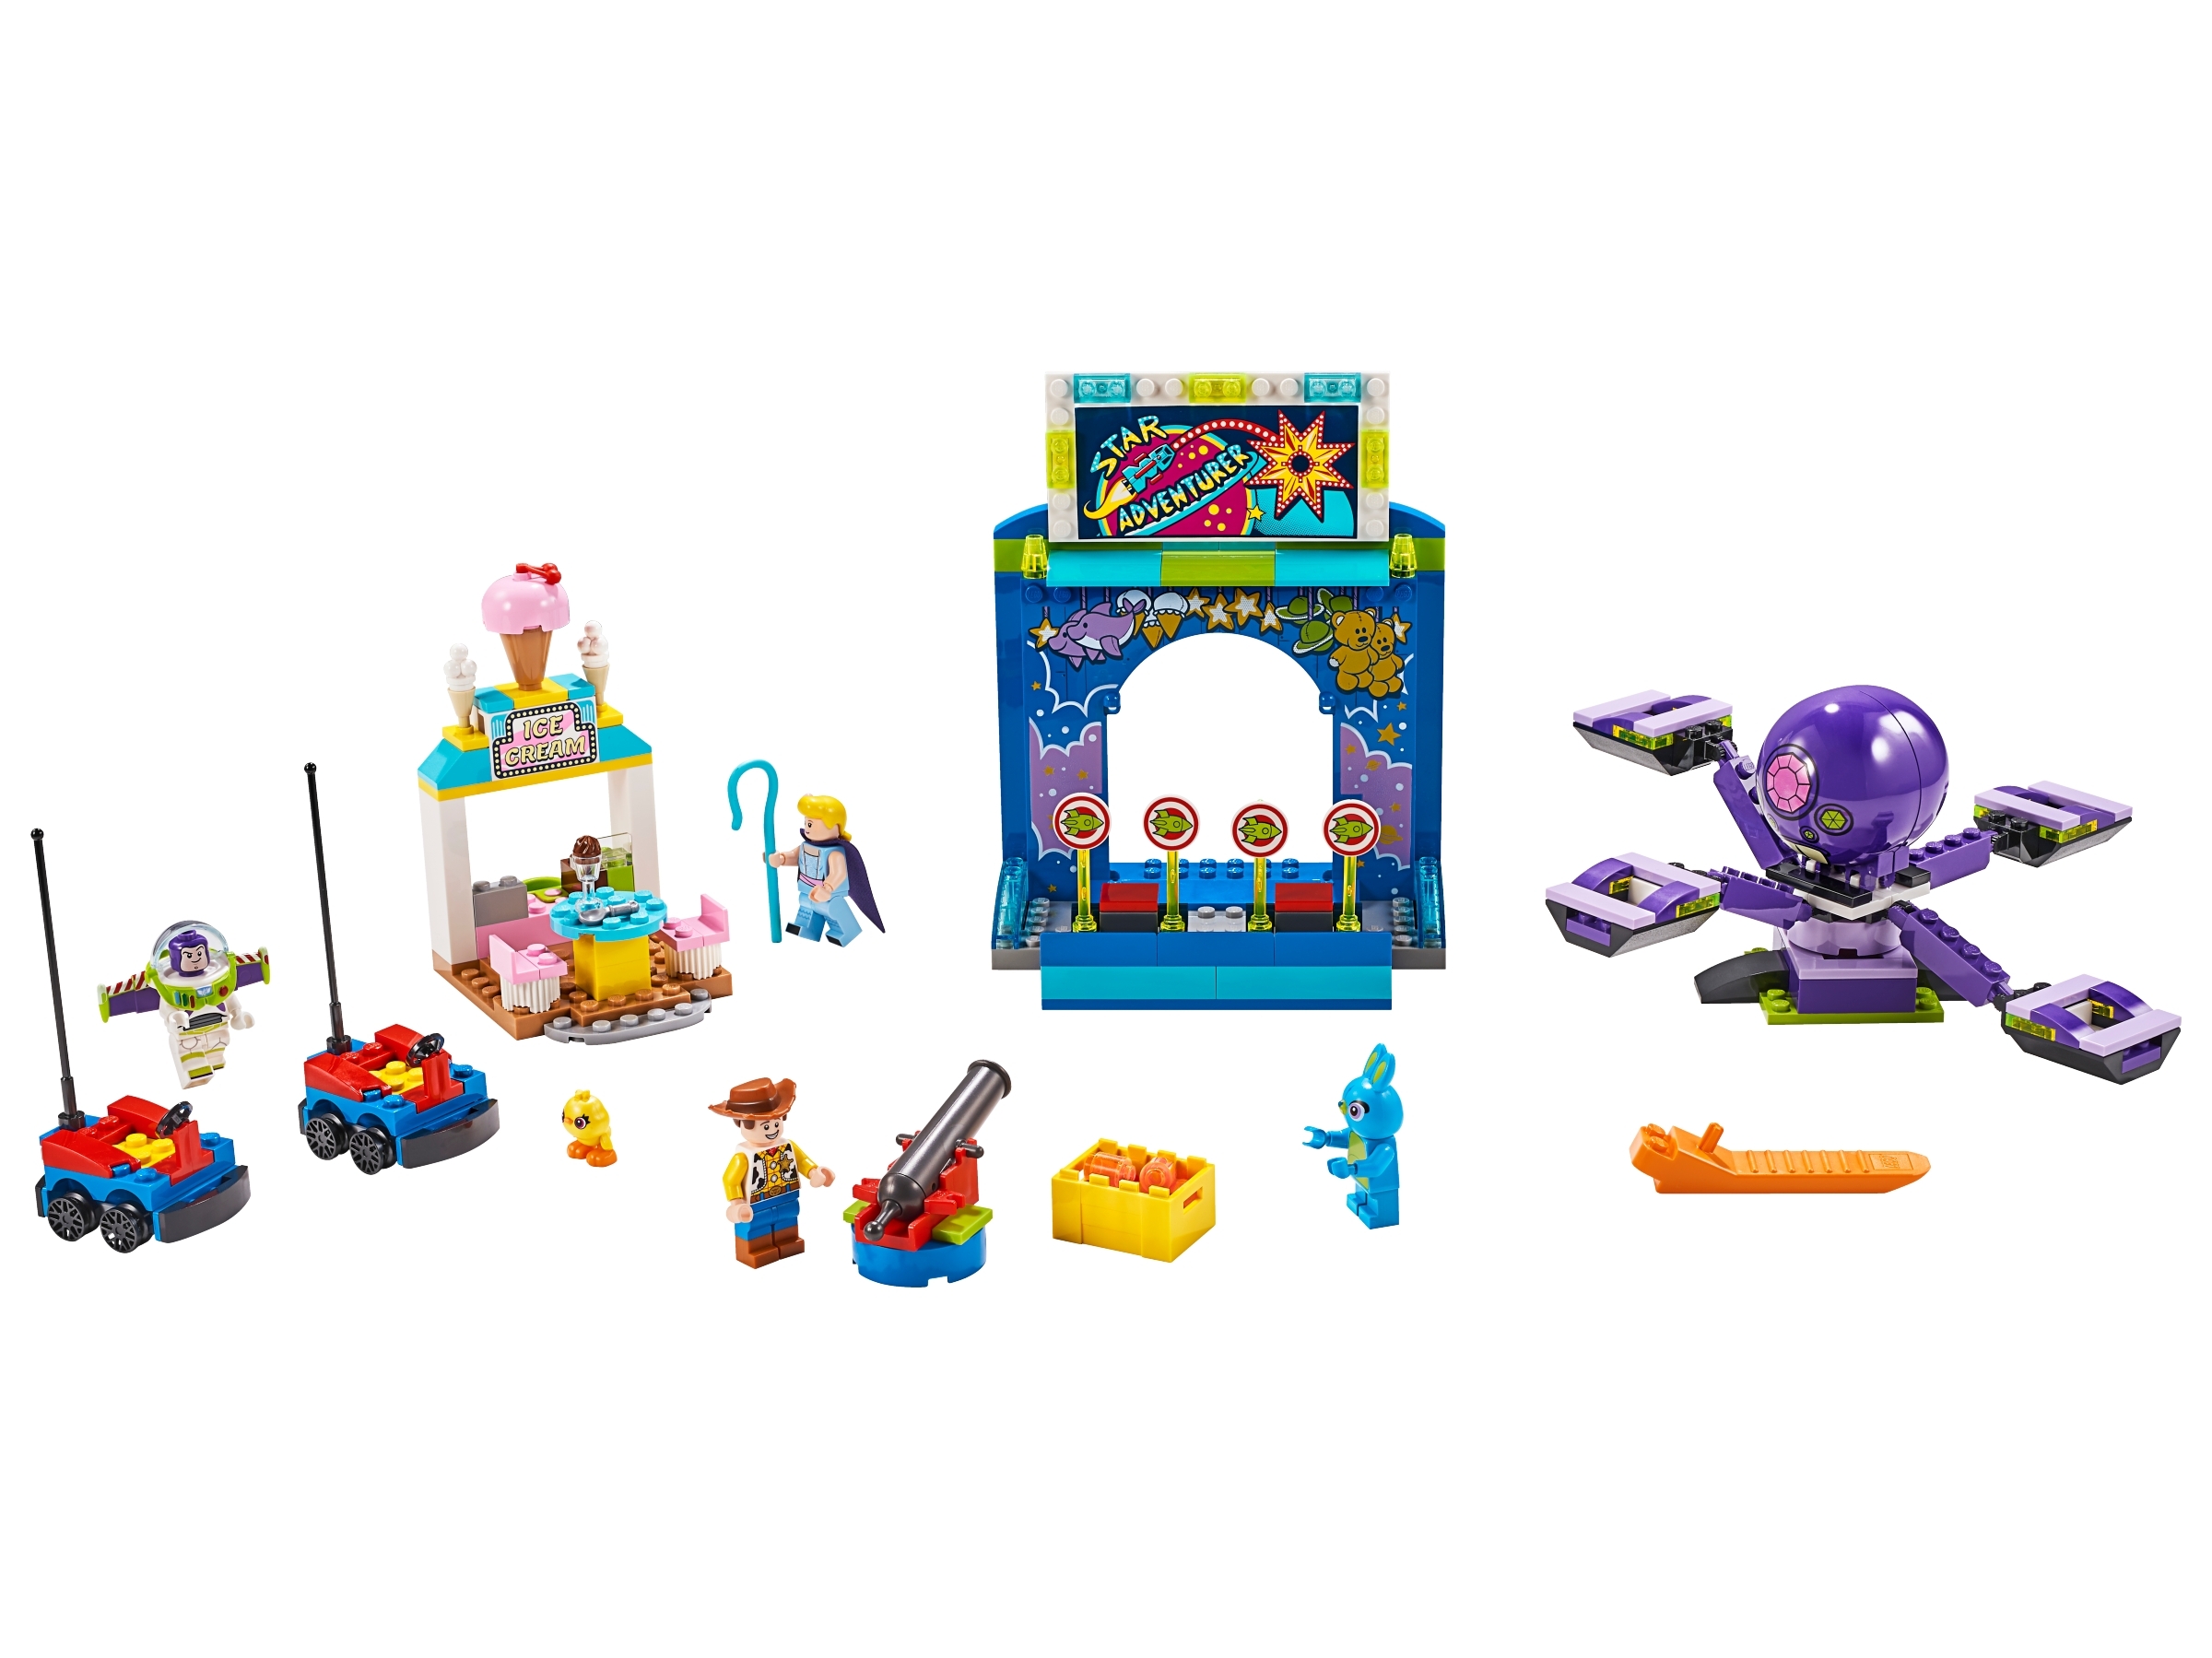 Lego Disney Pixar’s Toy Story 4 Carnival Mania Building Kit